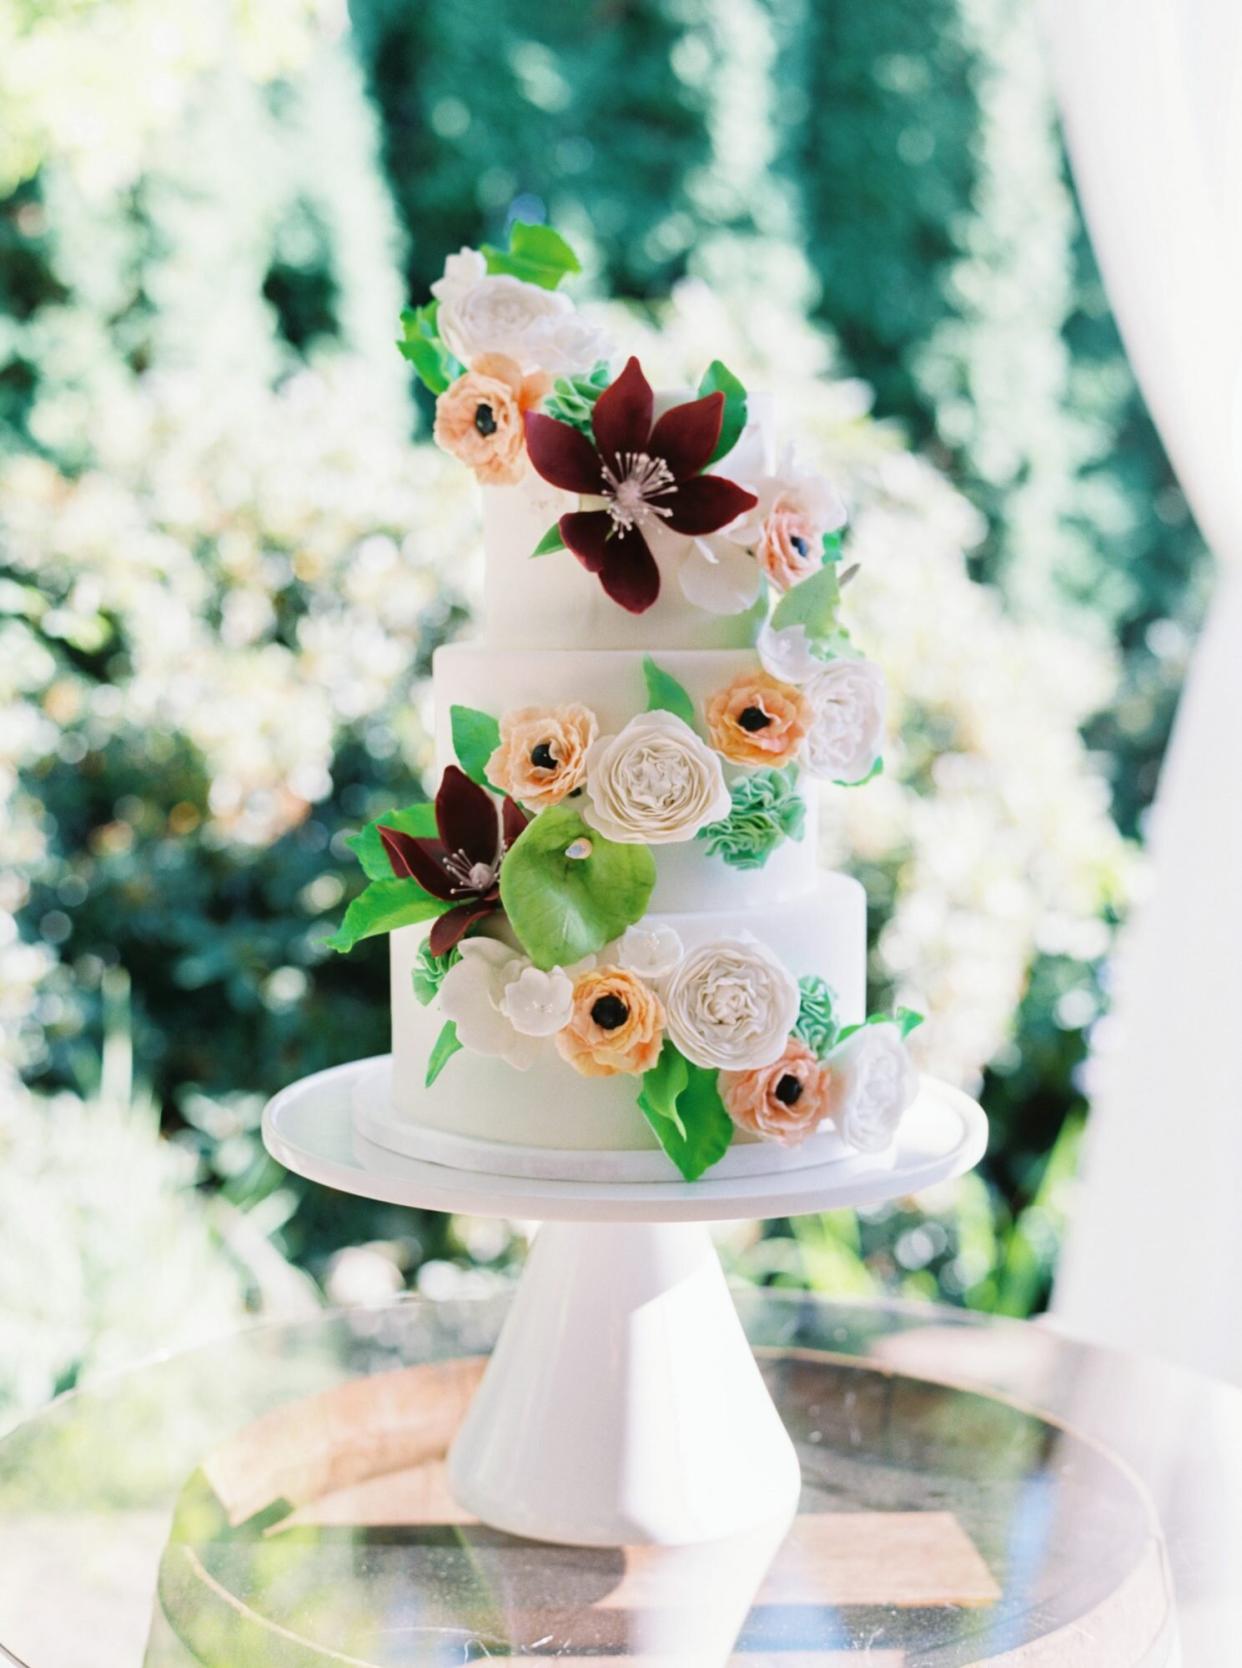 paige matt wedding cake with flowers